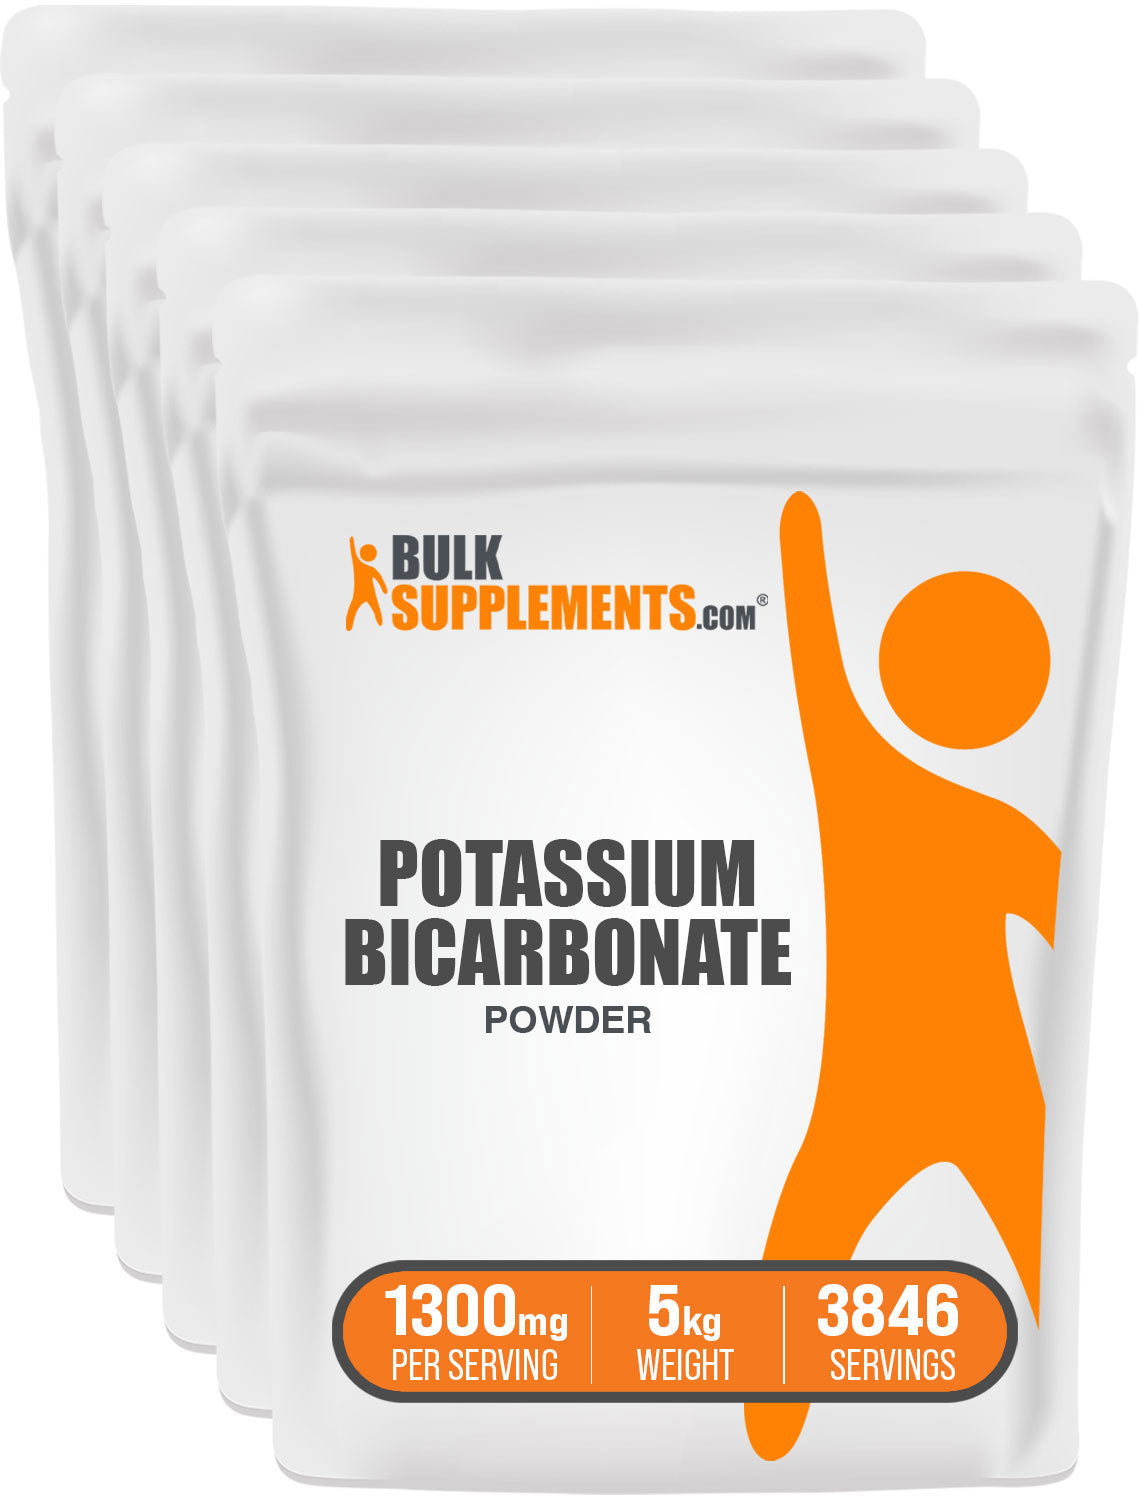 BulkSupplements.com Potassium Bicarbonate Powder 5kg bags